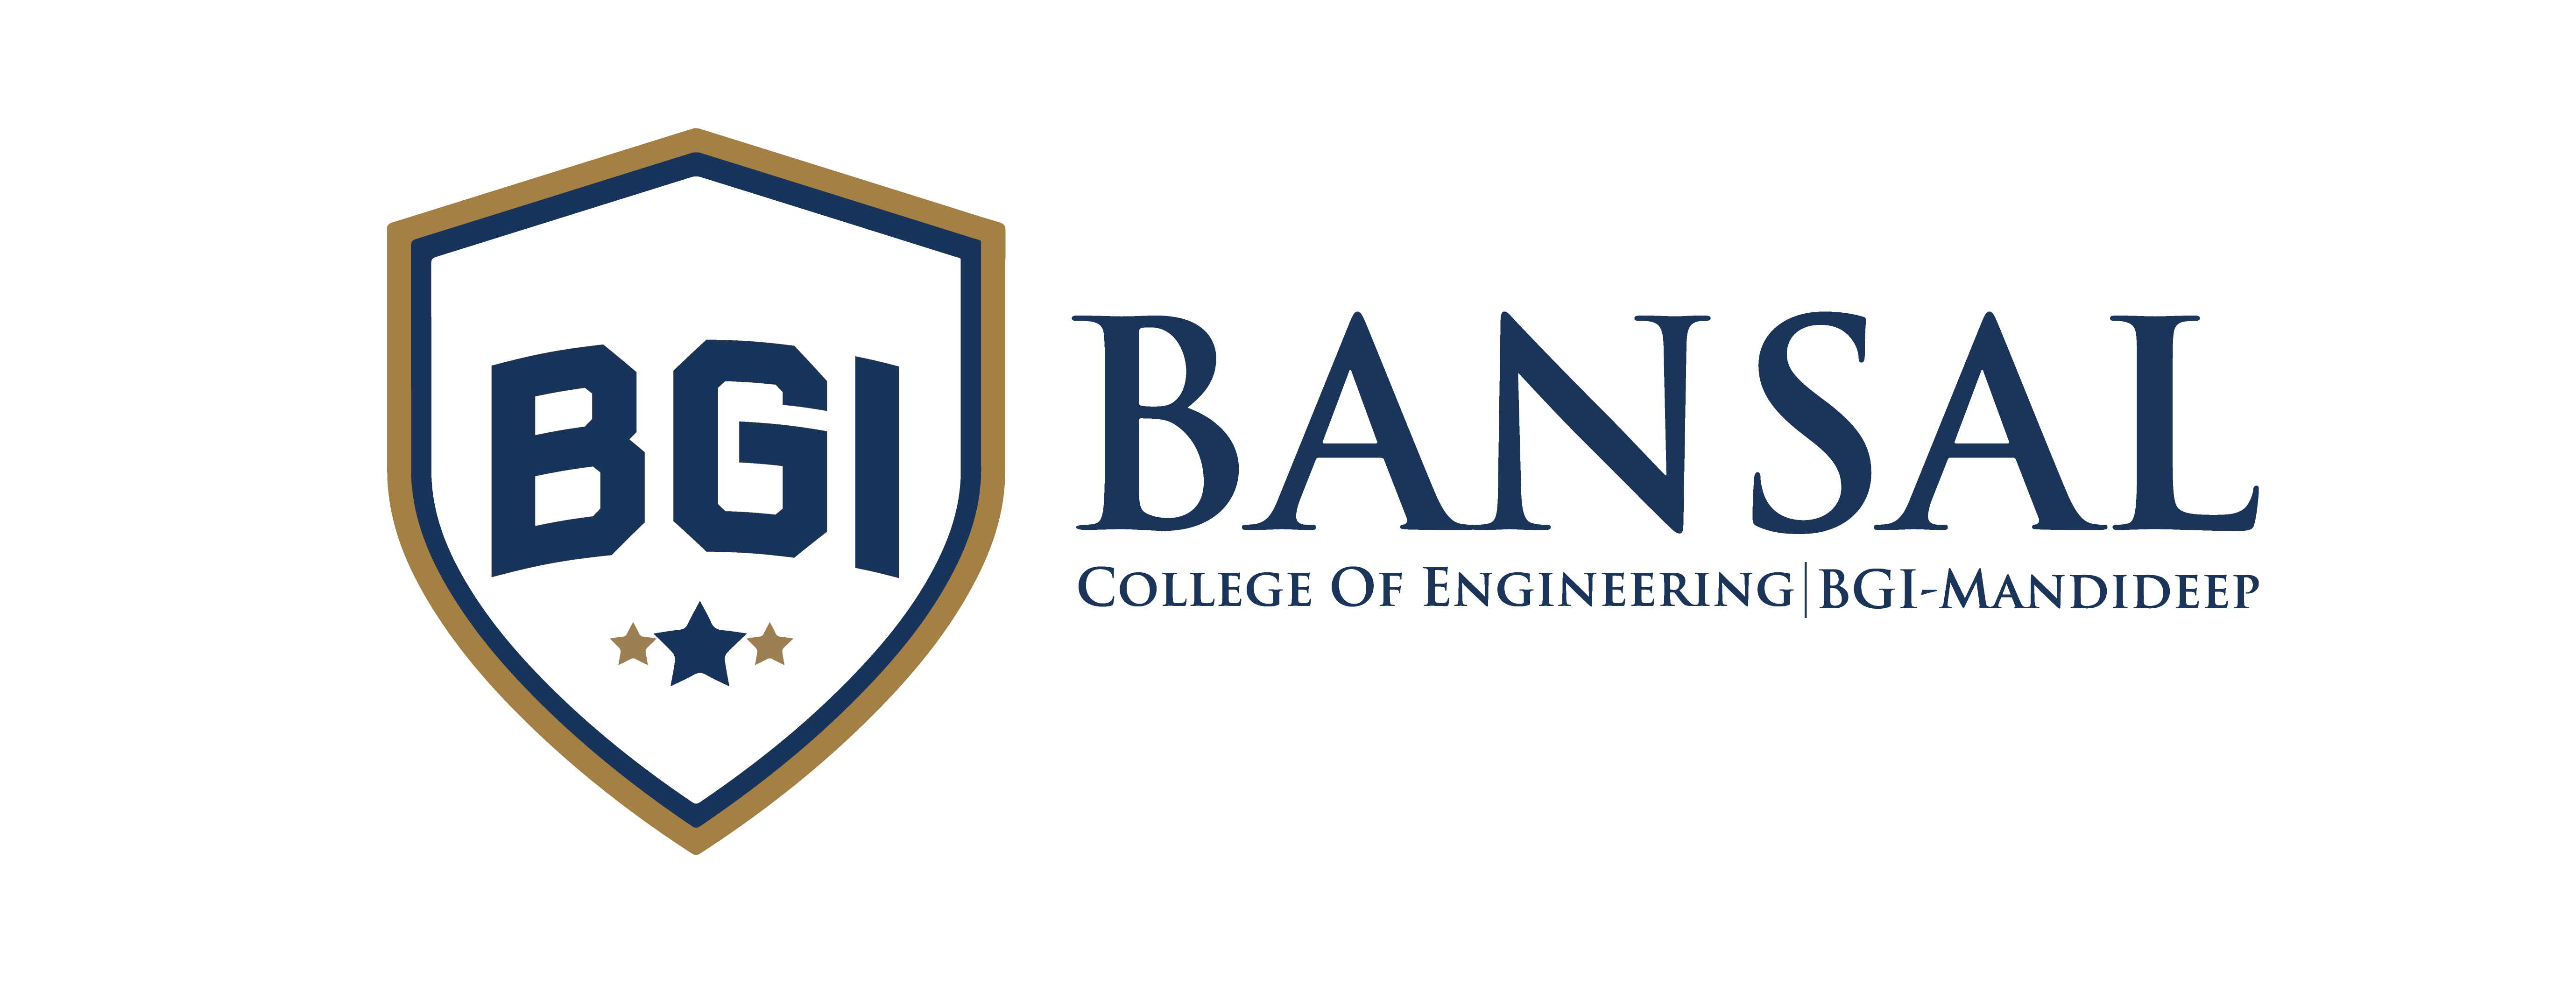 Bansal College of Engineering